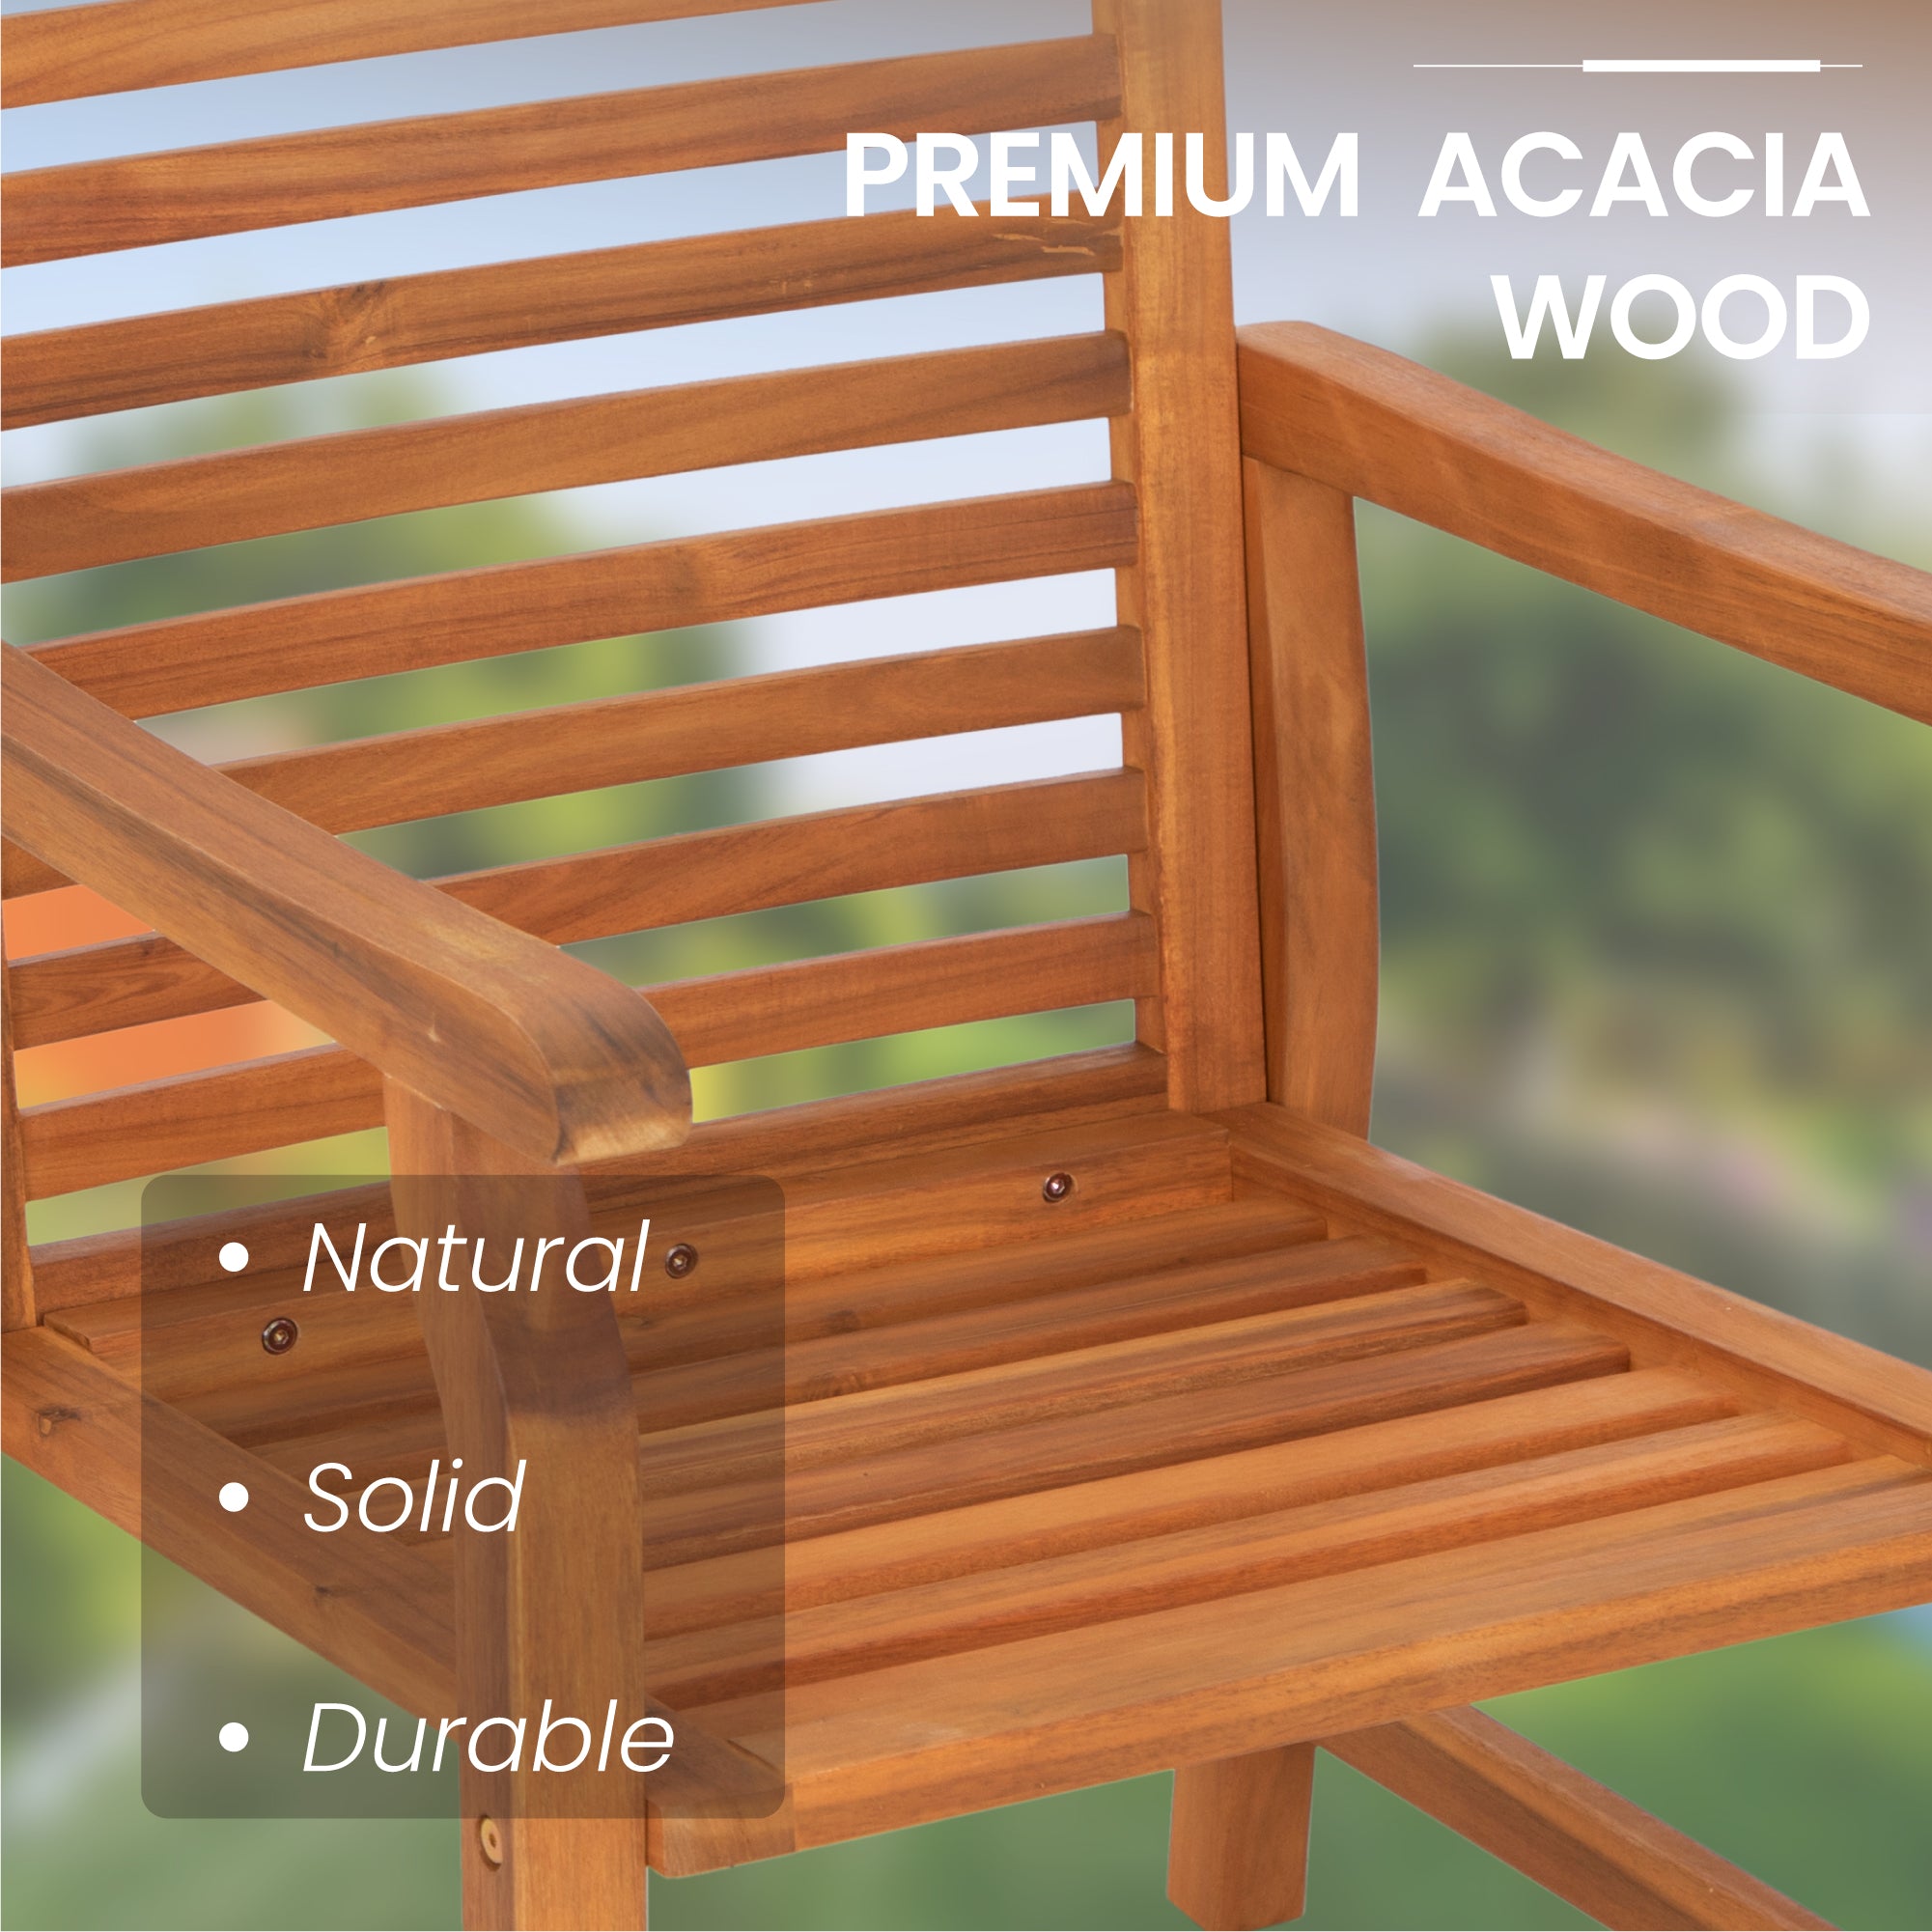 PHI VILLA Acacia Wood Patio Furniture Set Adjustable Table & Fixed Chairs